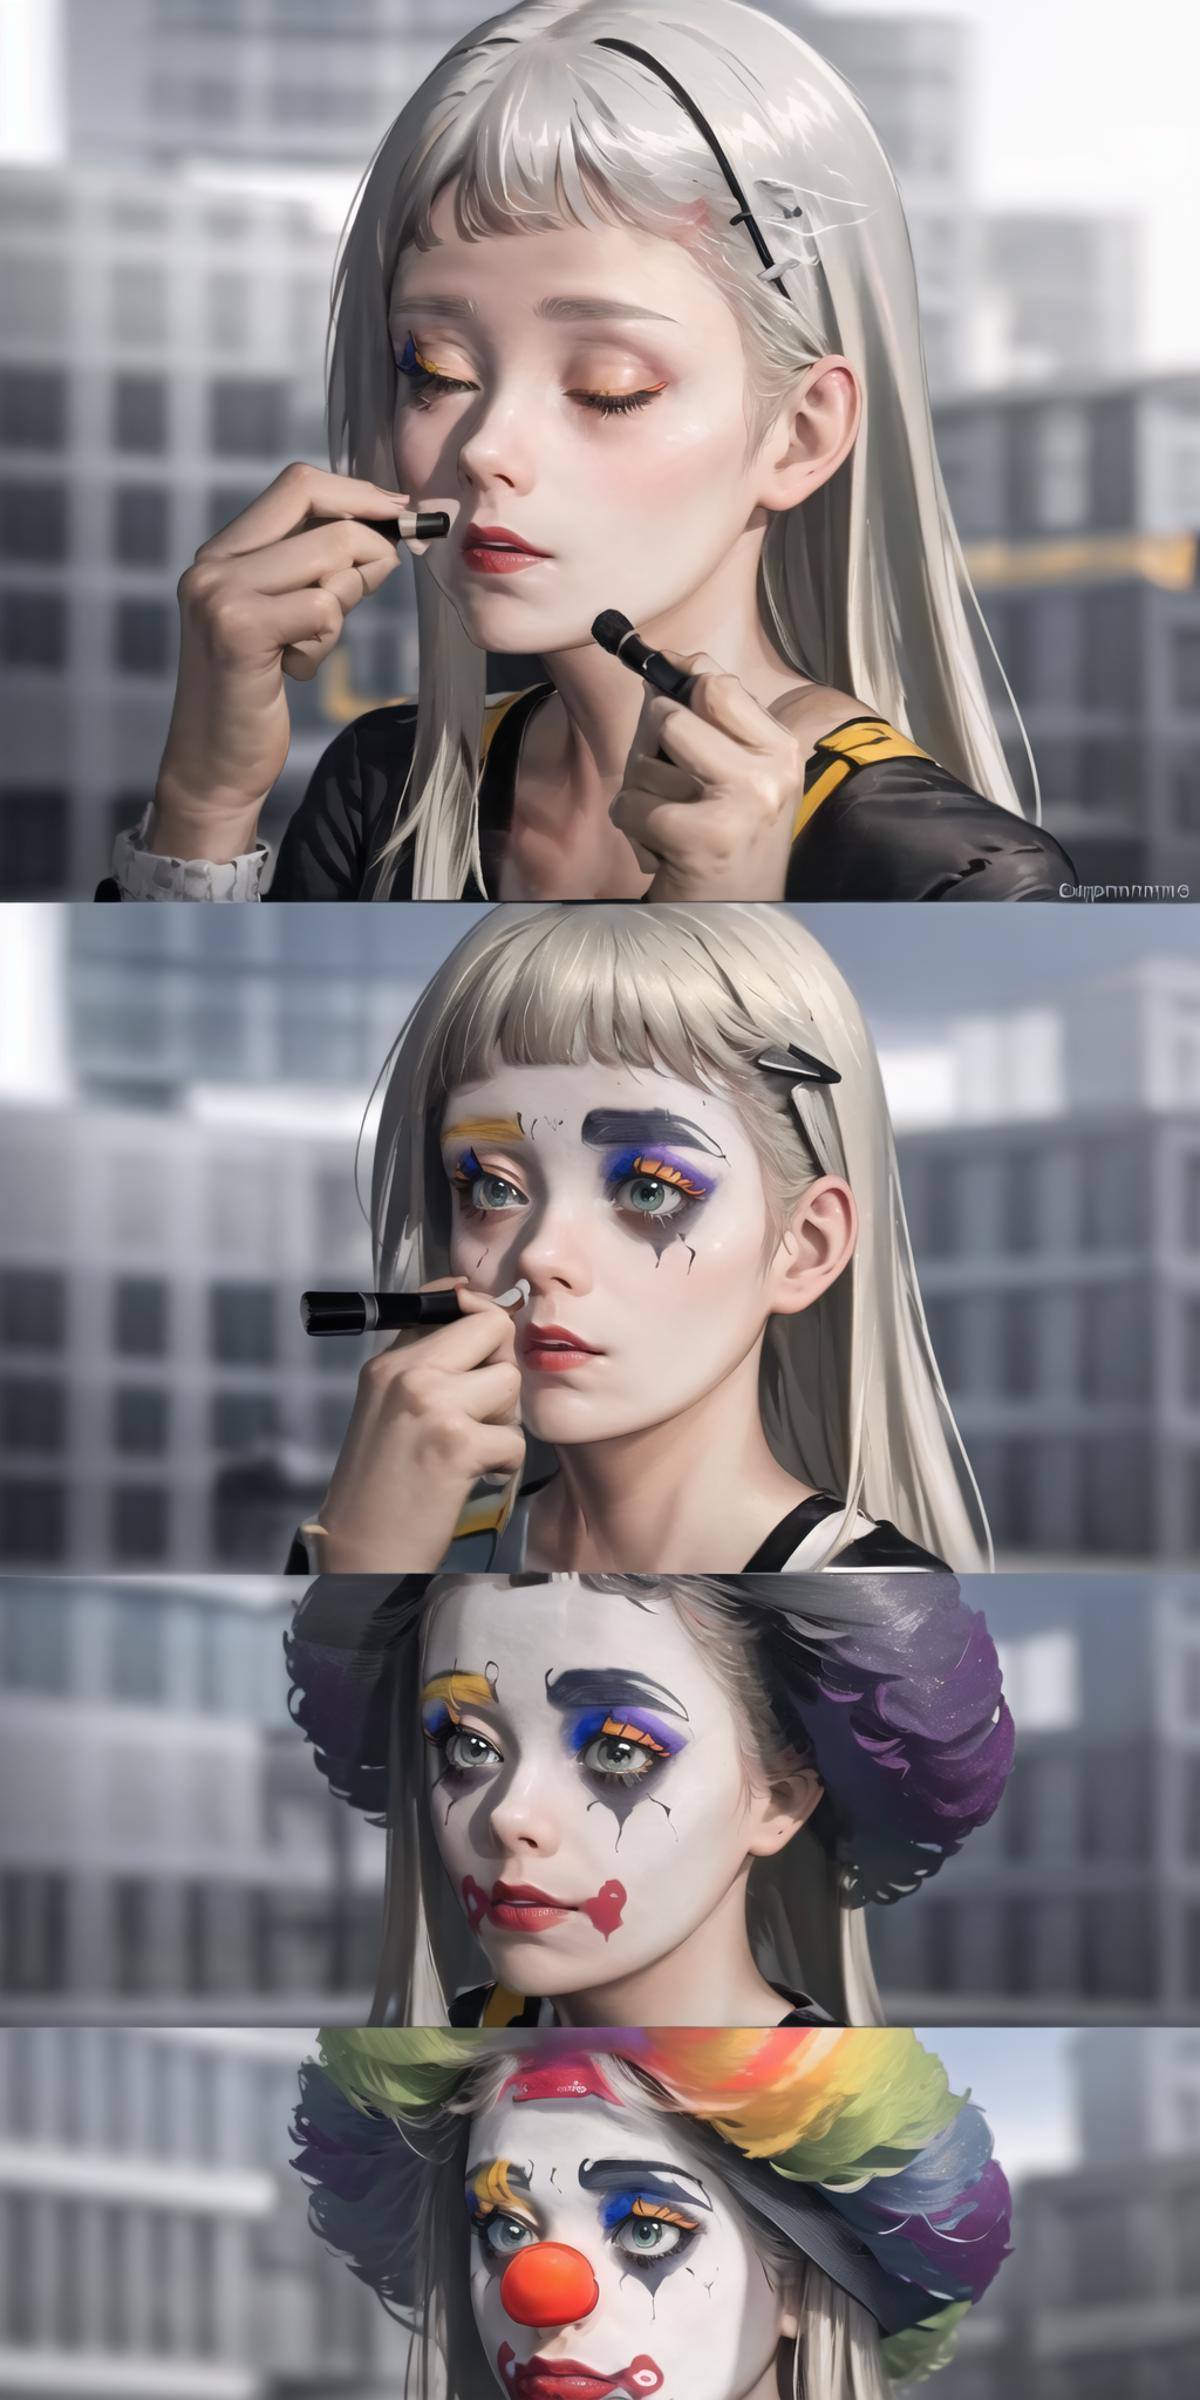 Putting On Clown Makeup Meme | Concept LoRA image by Jelosus1